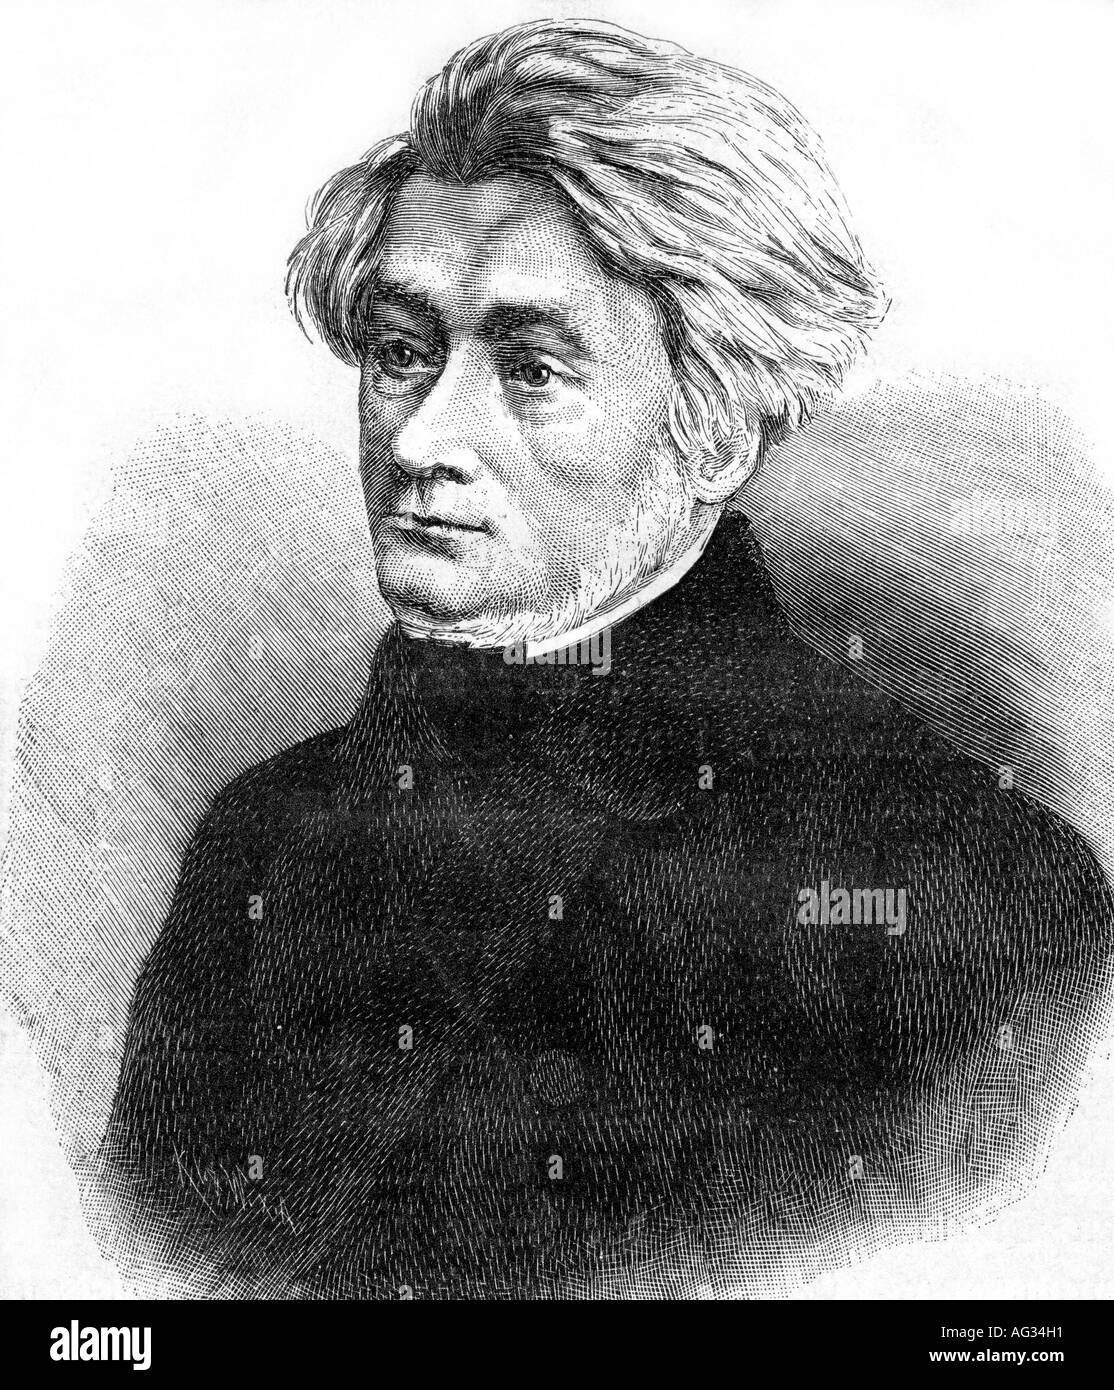 Mickiewicz, Adam, 24.12.1798 - 26.11.1855, Polish poet, portrait, engraving, 19th century, Stock Photo